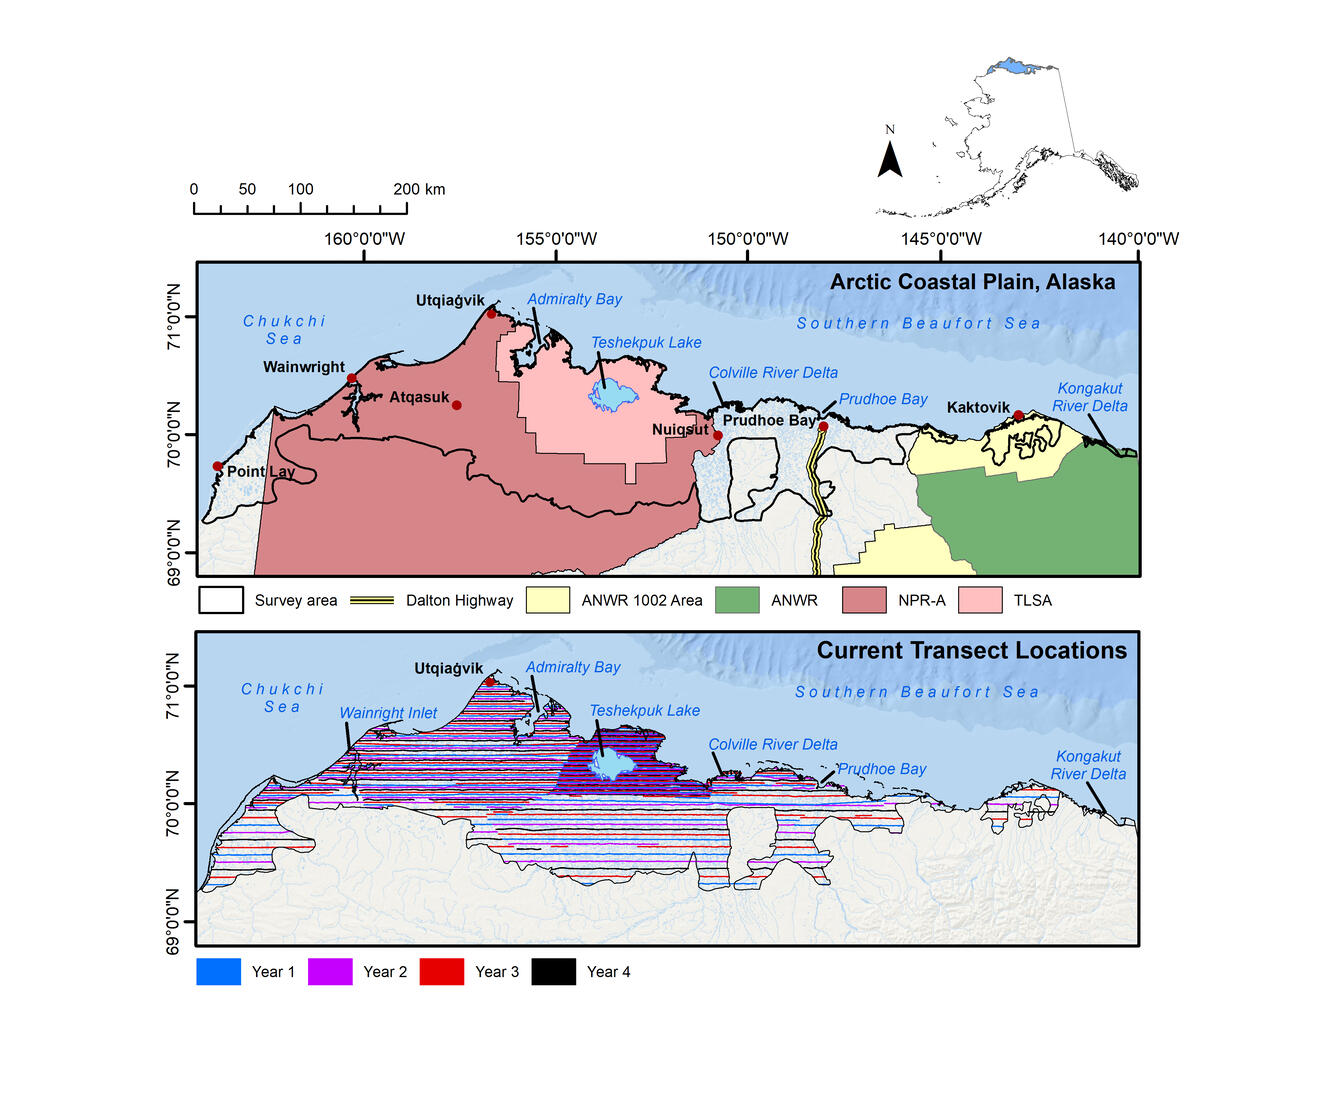 Arctic Coastal Plain Boundaries and Transects